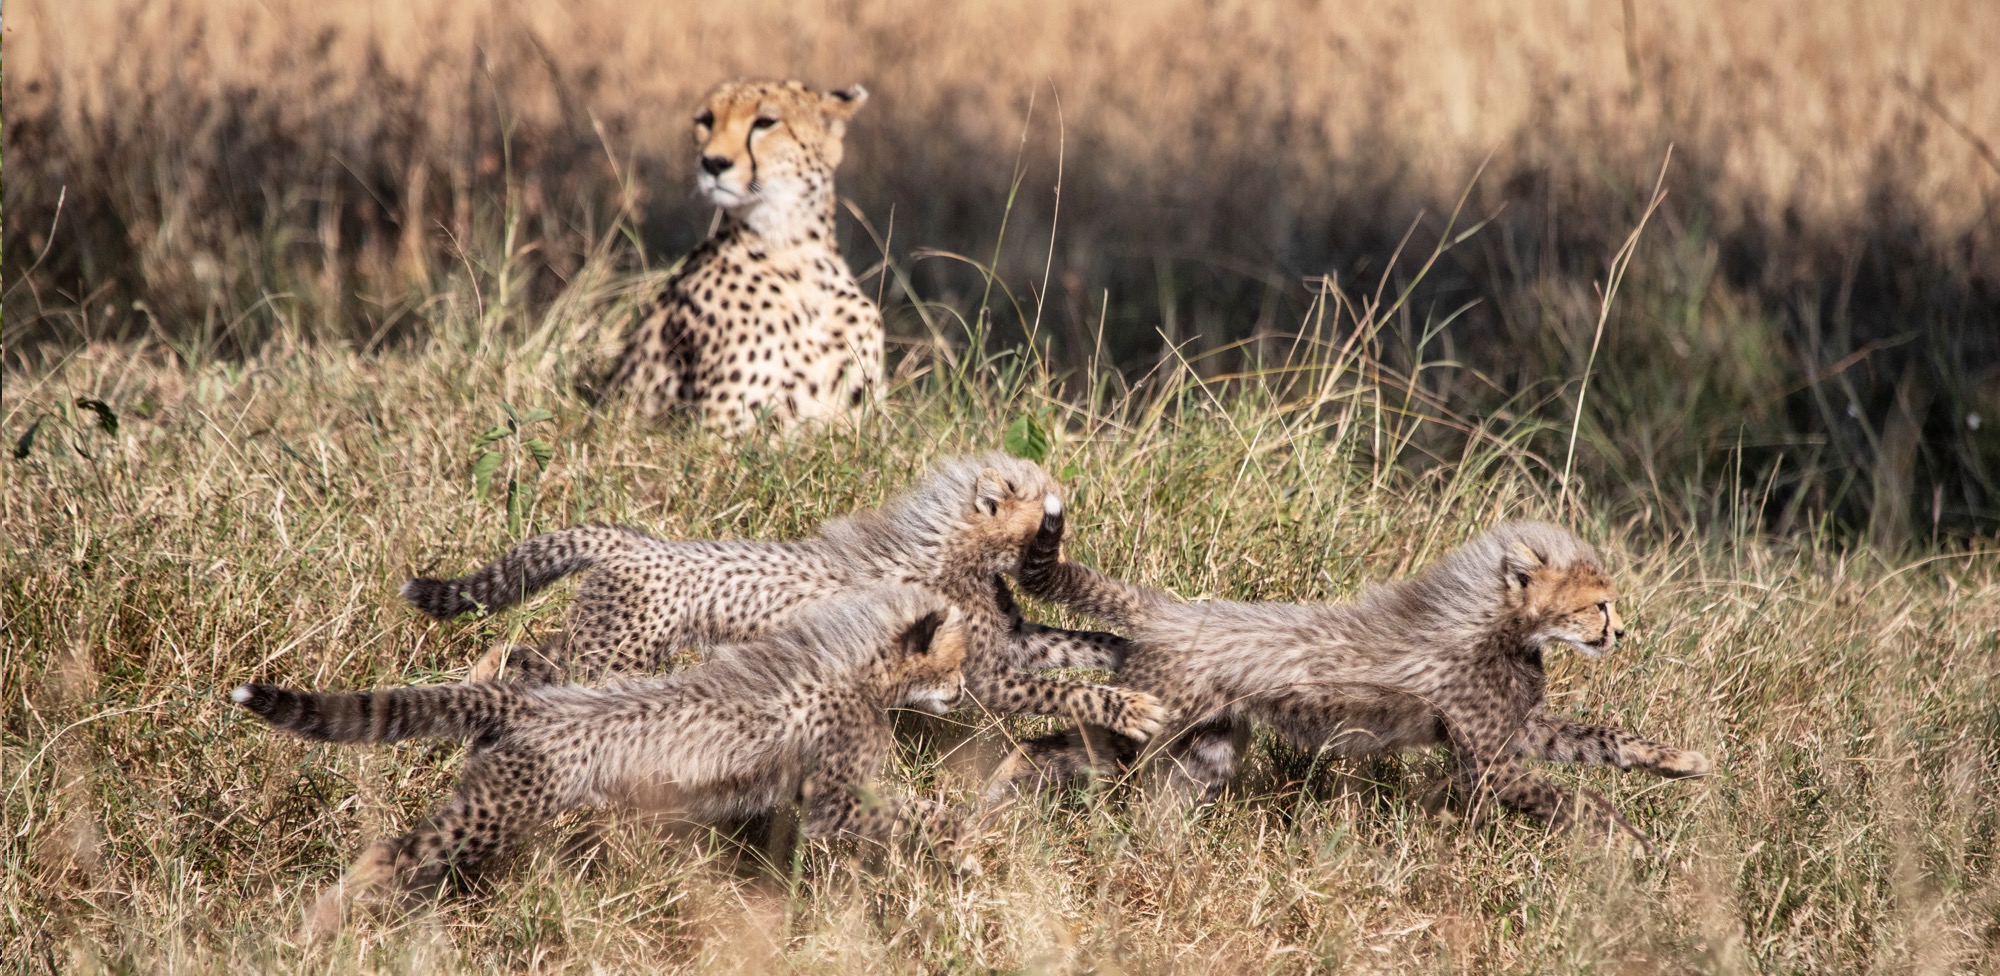 Gallery Mara - leopard replacement_Snapseed.jpg